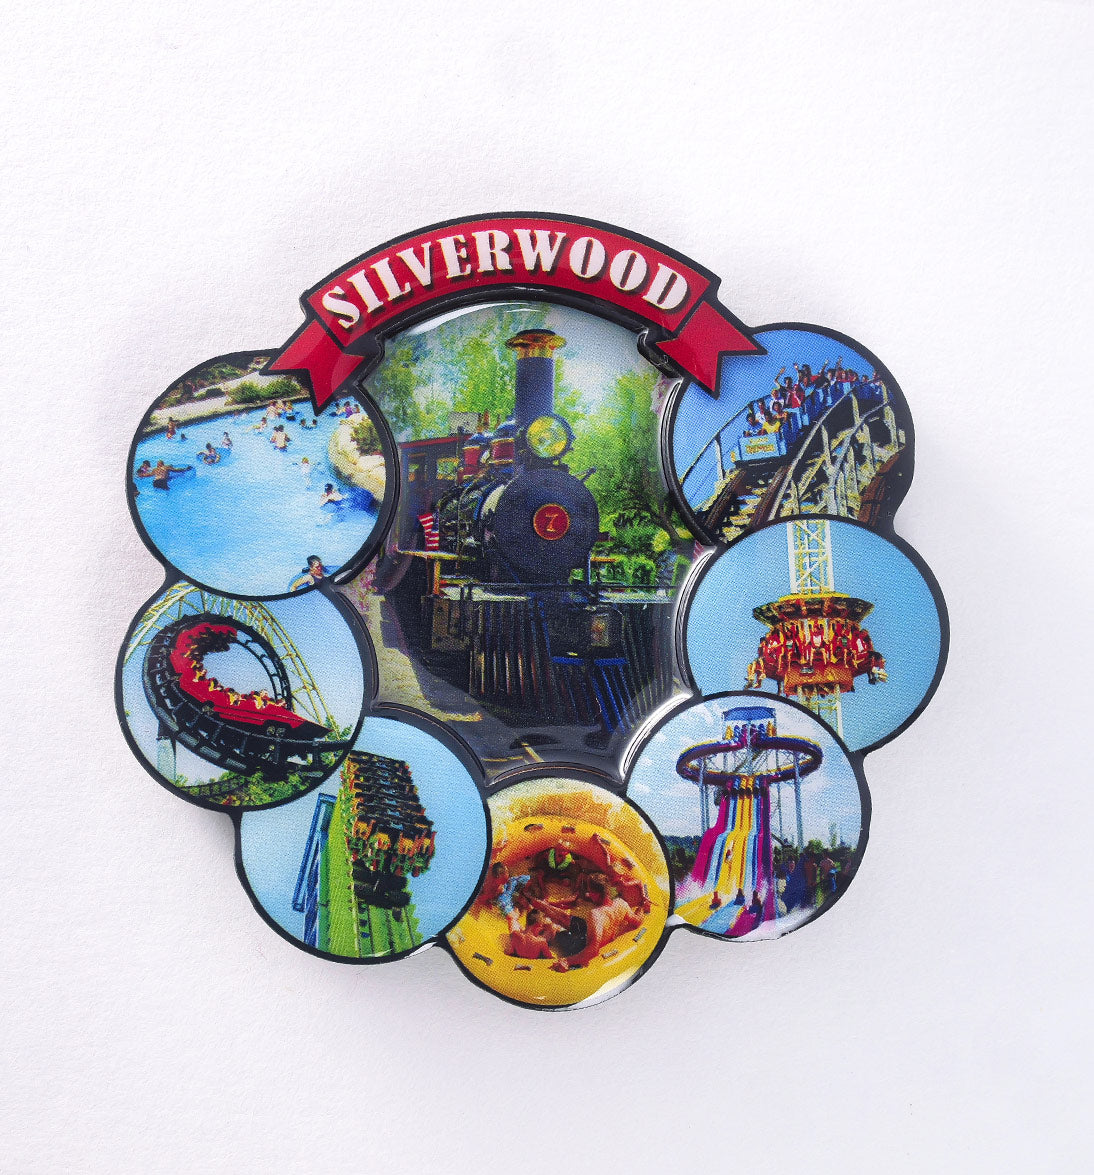 Silverwood 7 Circle Magnet